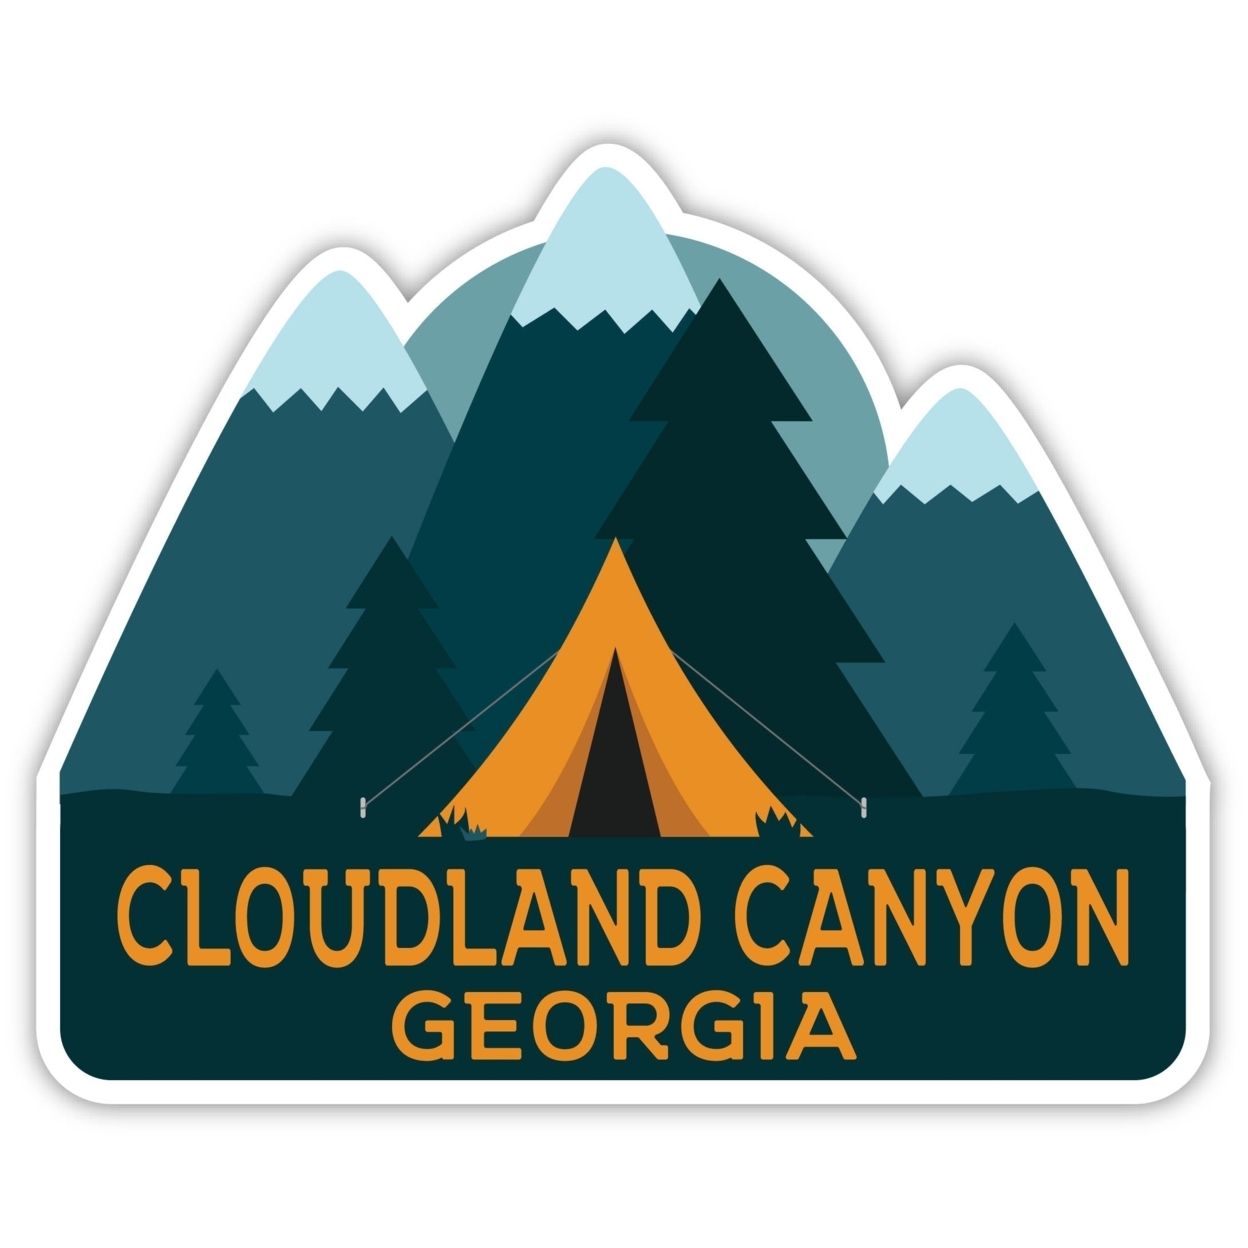 Cloudland Canyon Georgia Souvenir Decorative Stickers (Choose Theme And Size) - Single Unit, 6-Inch, Tent